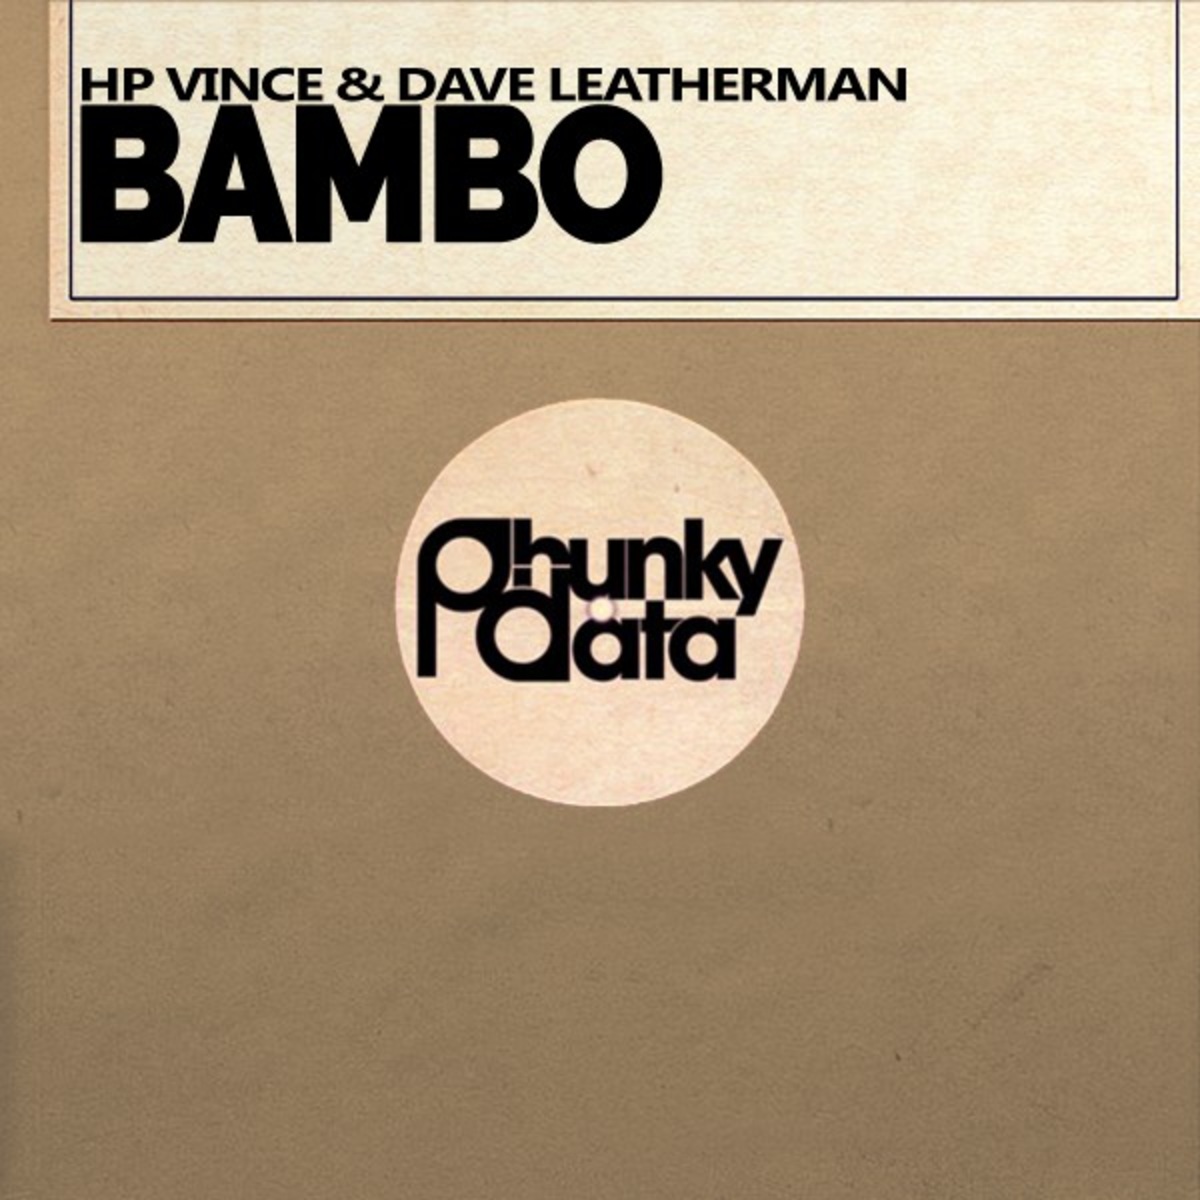 HP Vince & Dave Leatherman - Bambo / Phunky Data